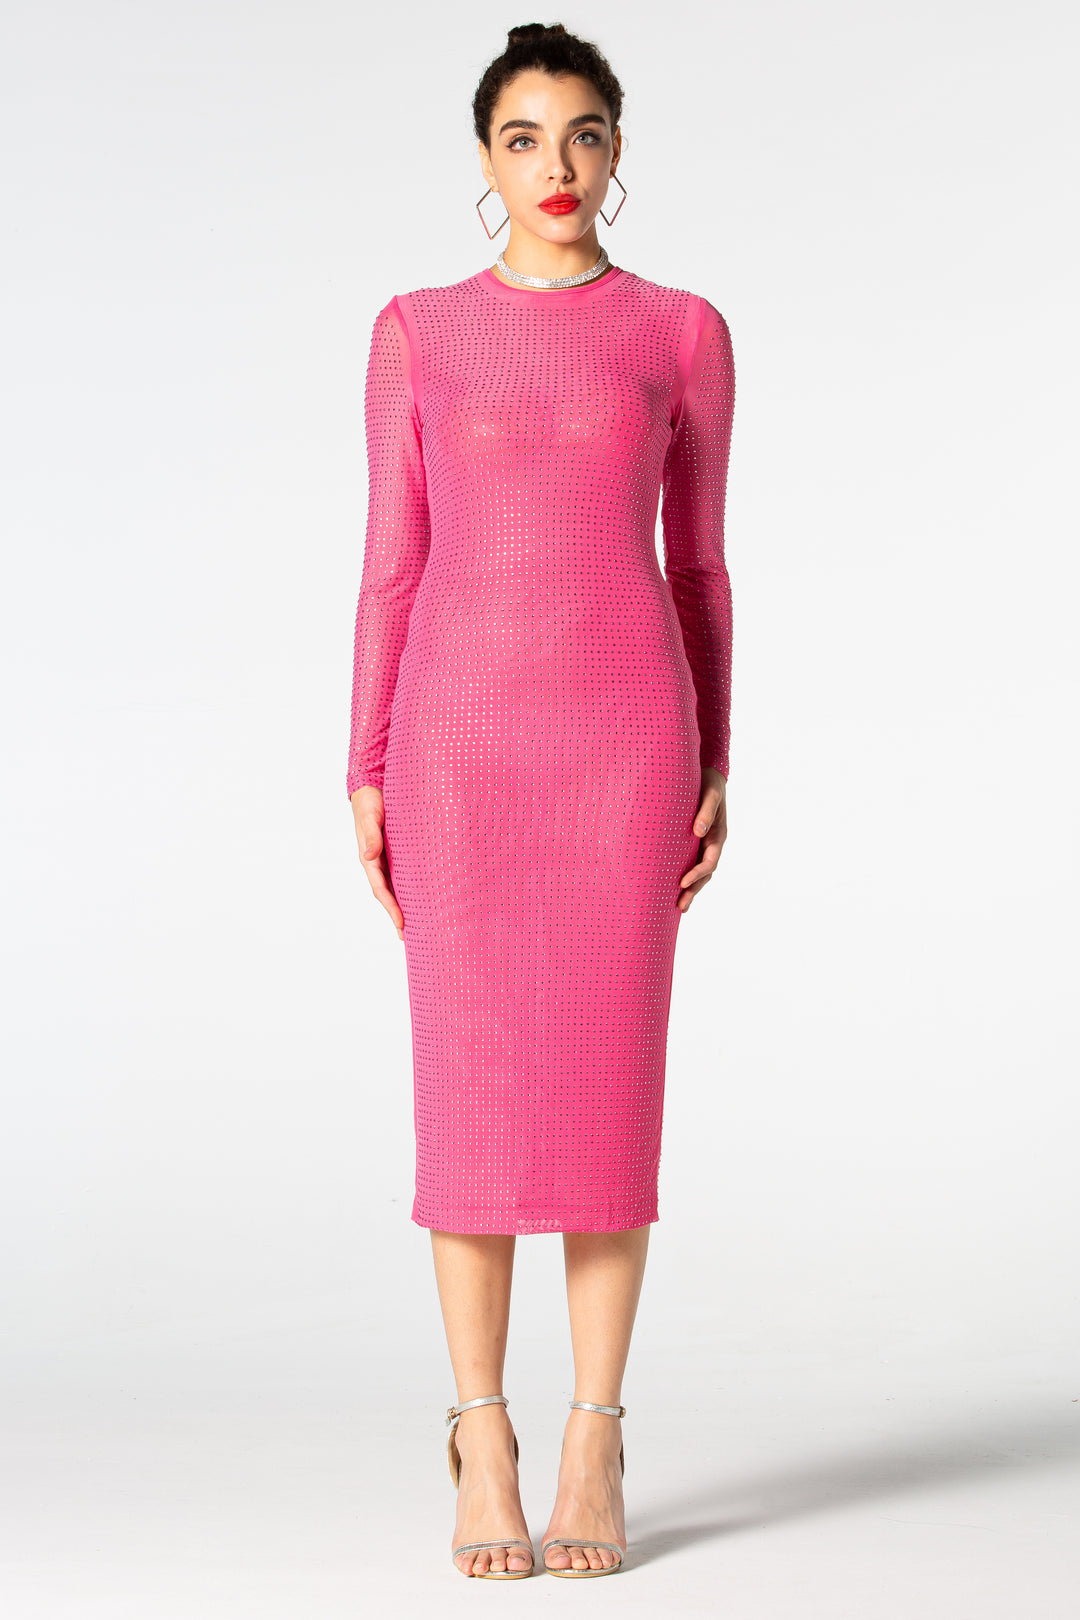 Sesidy Carla Rhinestone Pink Long Sleeve Dress in Pink